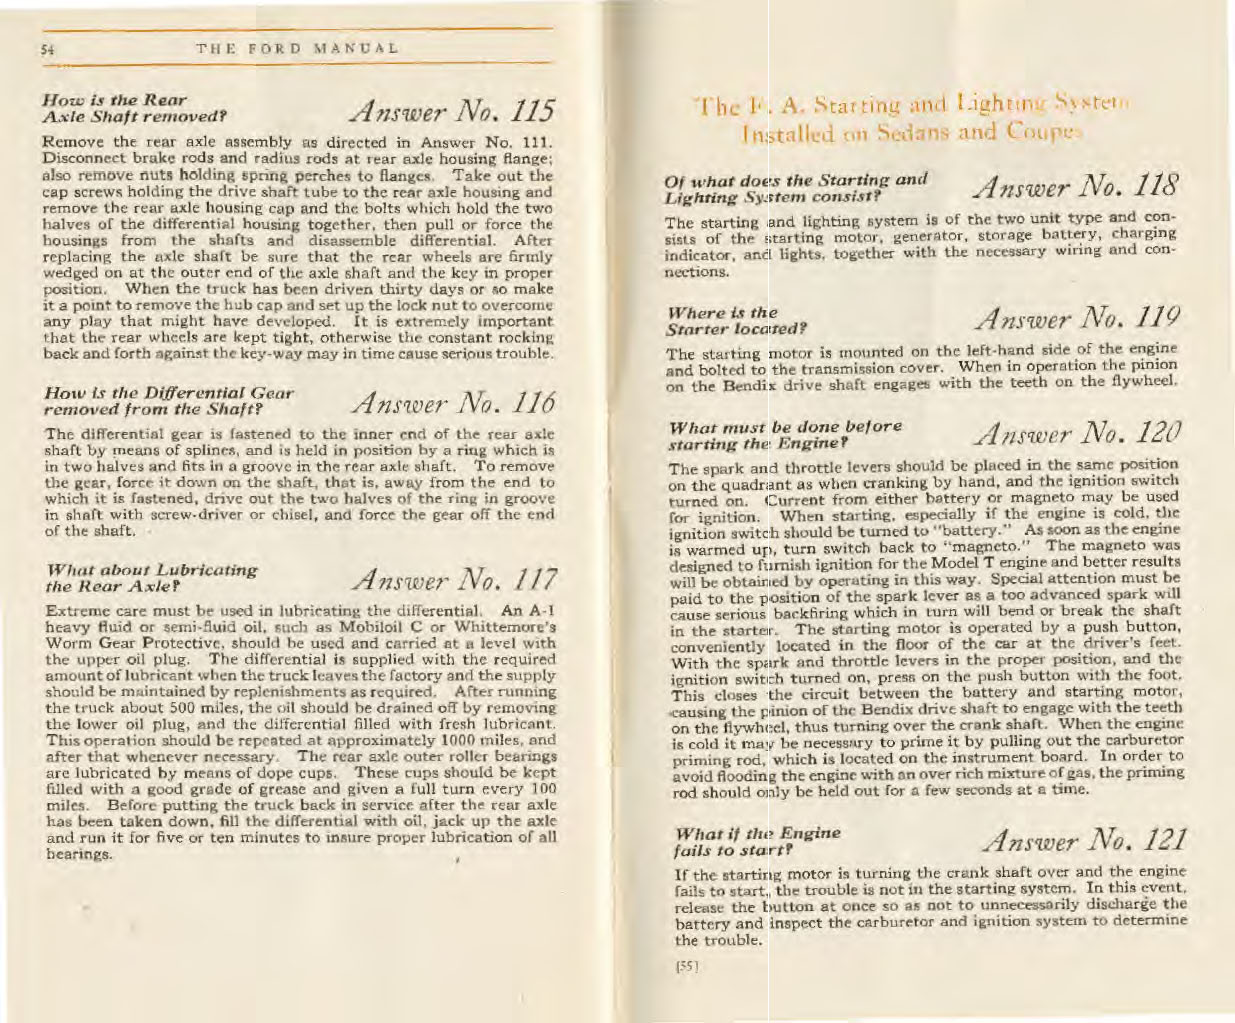 n_1919 Ford Manual-54-55.jpg